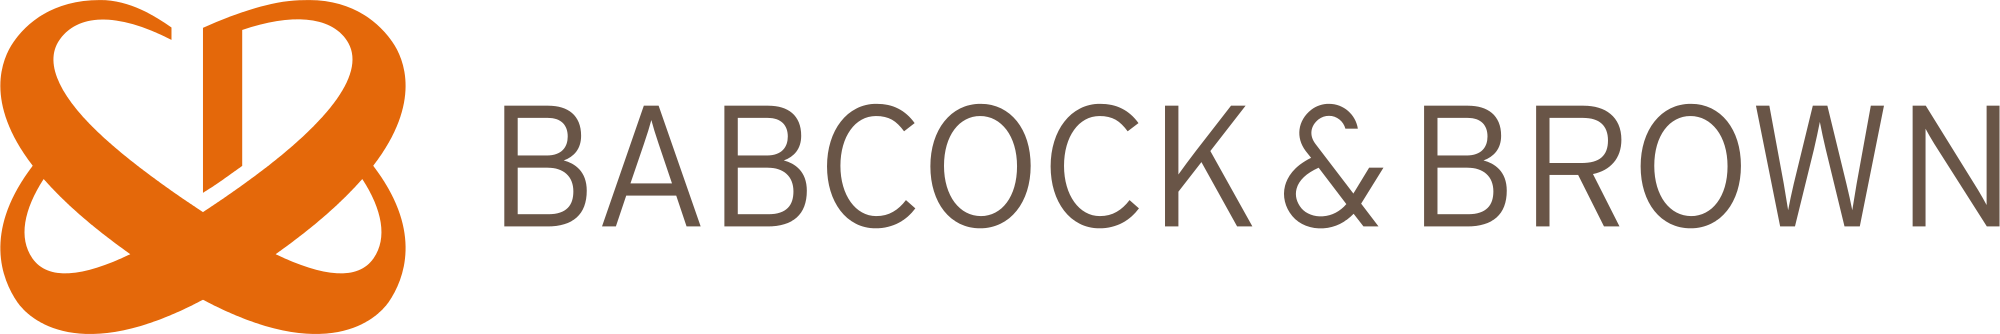 BABCOCK & BROWN Brand Logo